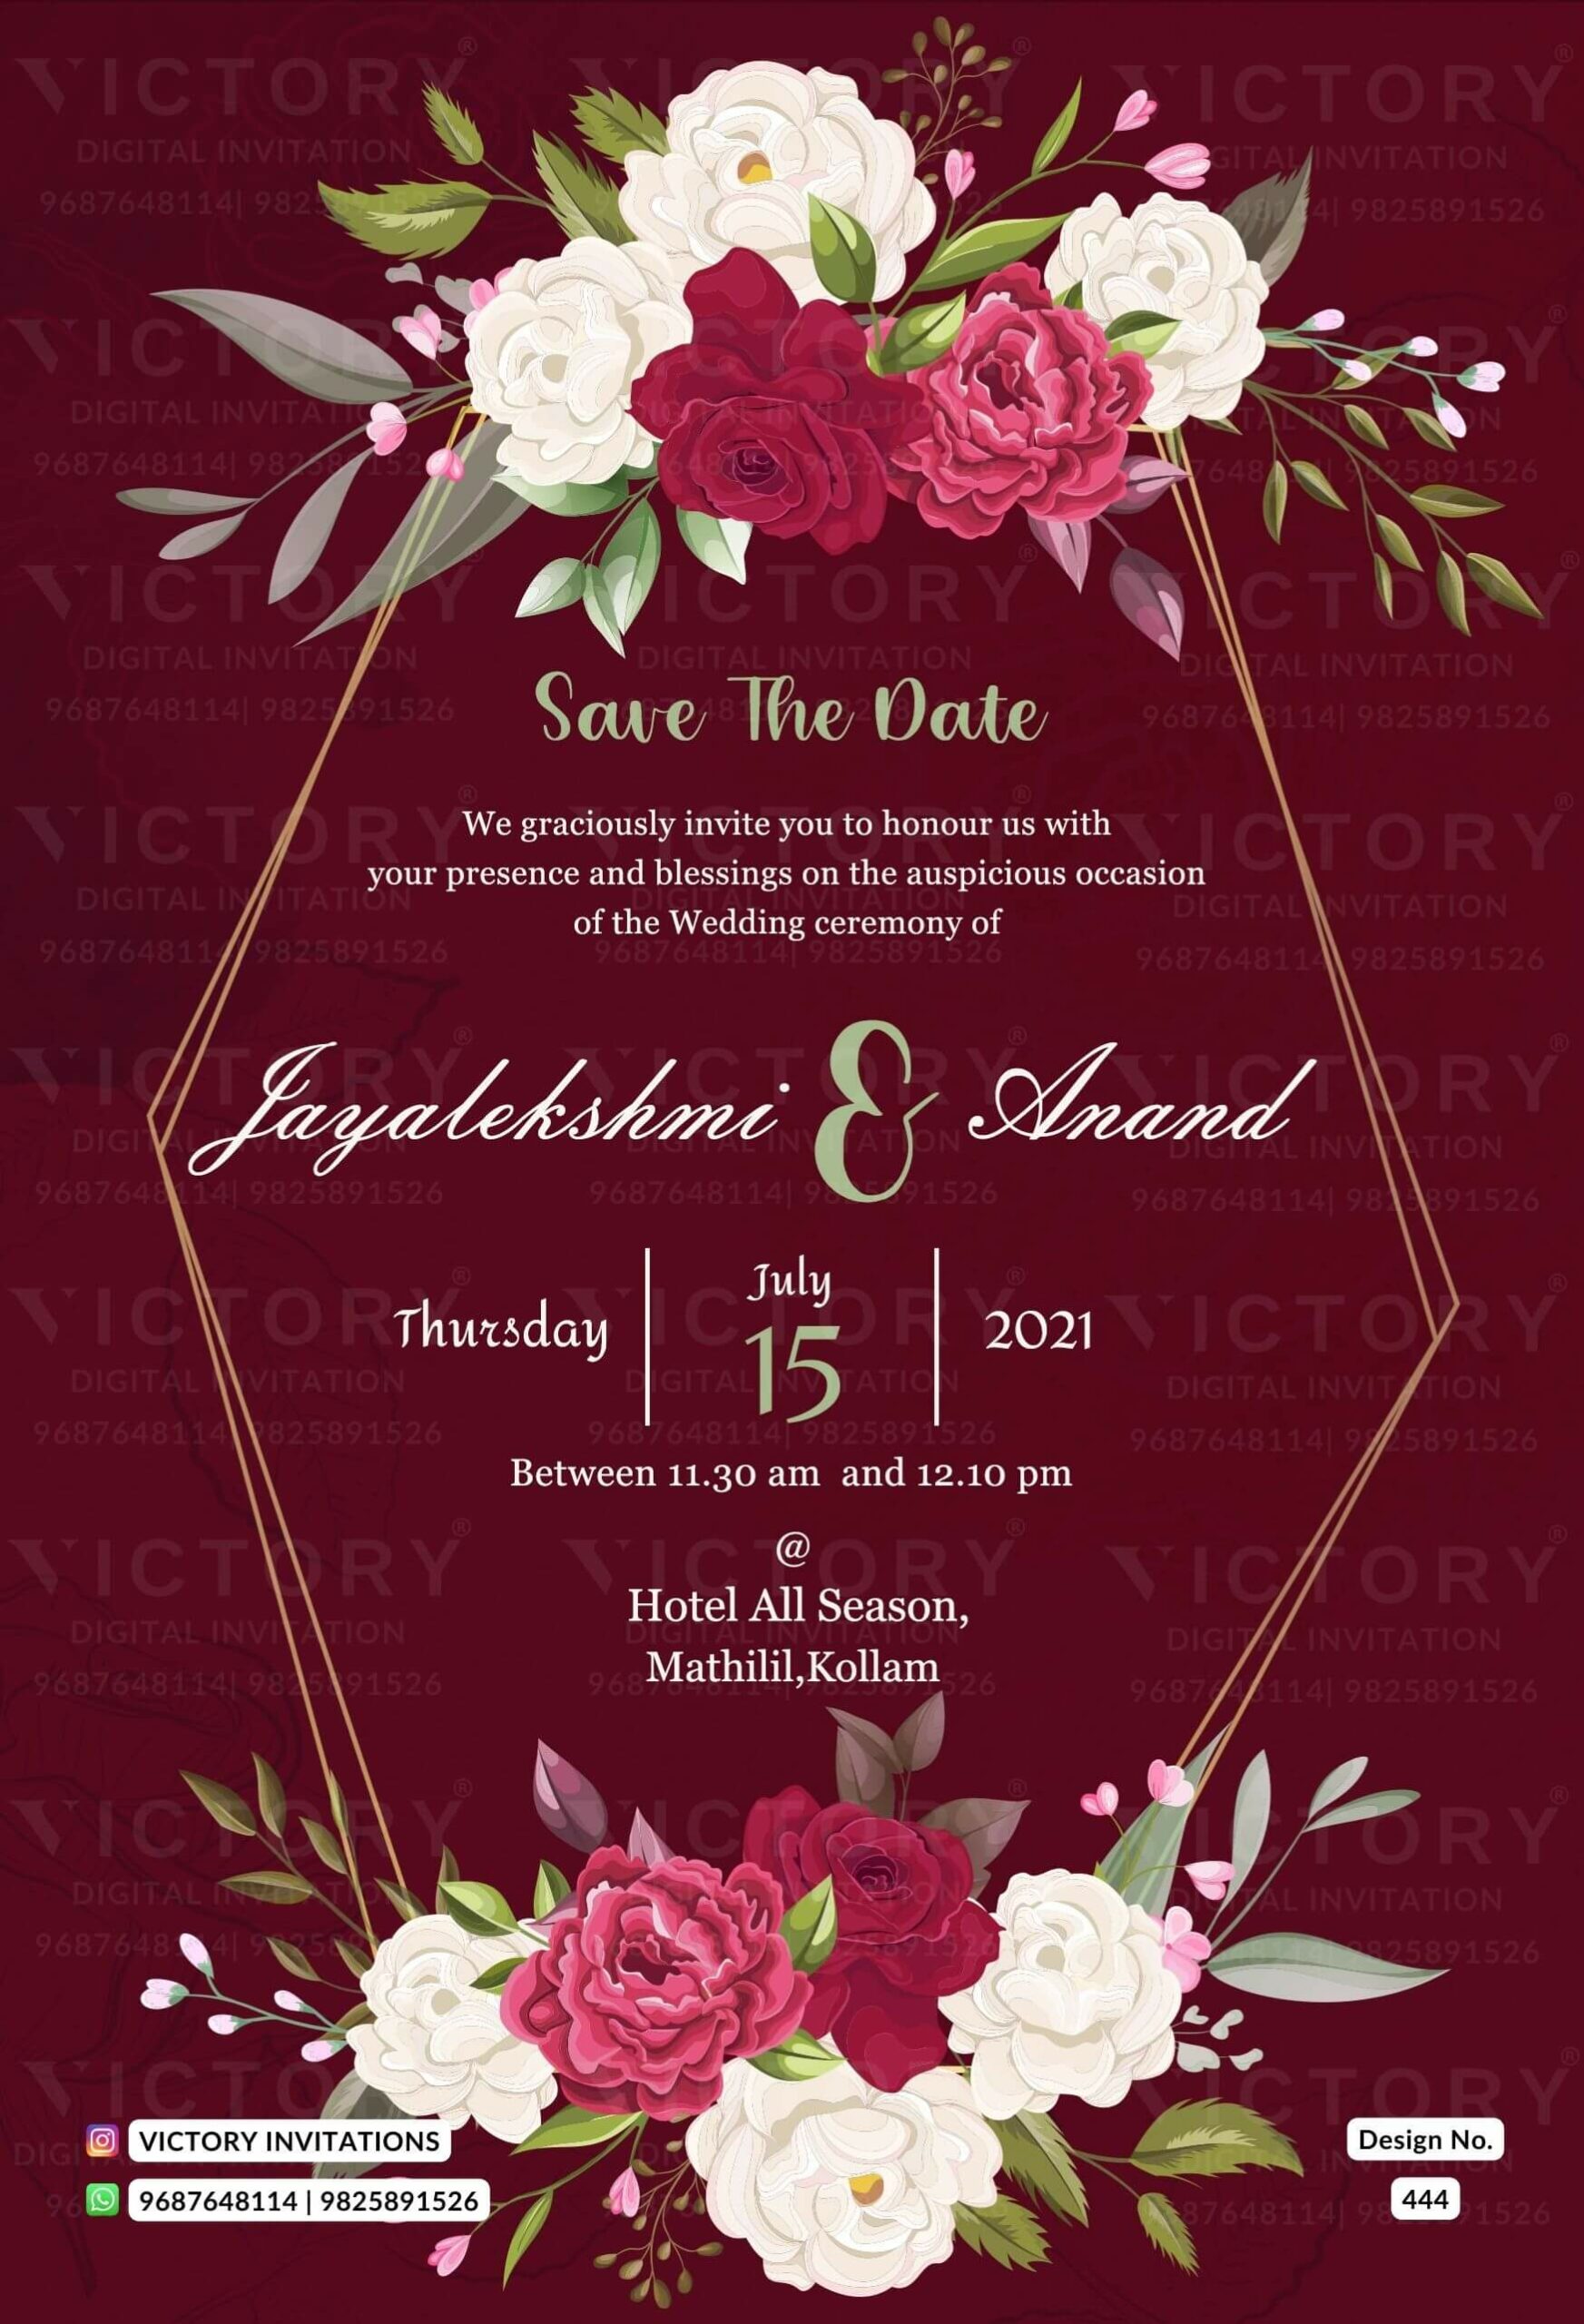 Save the Date digital invitation card design no.444